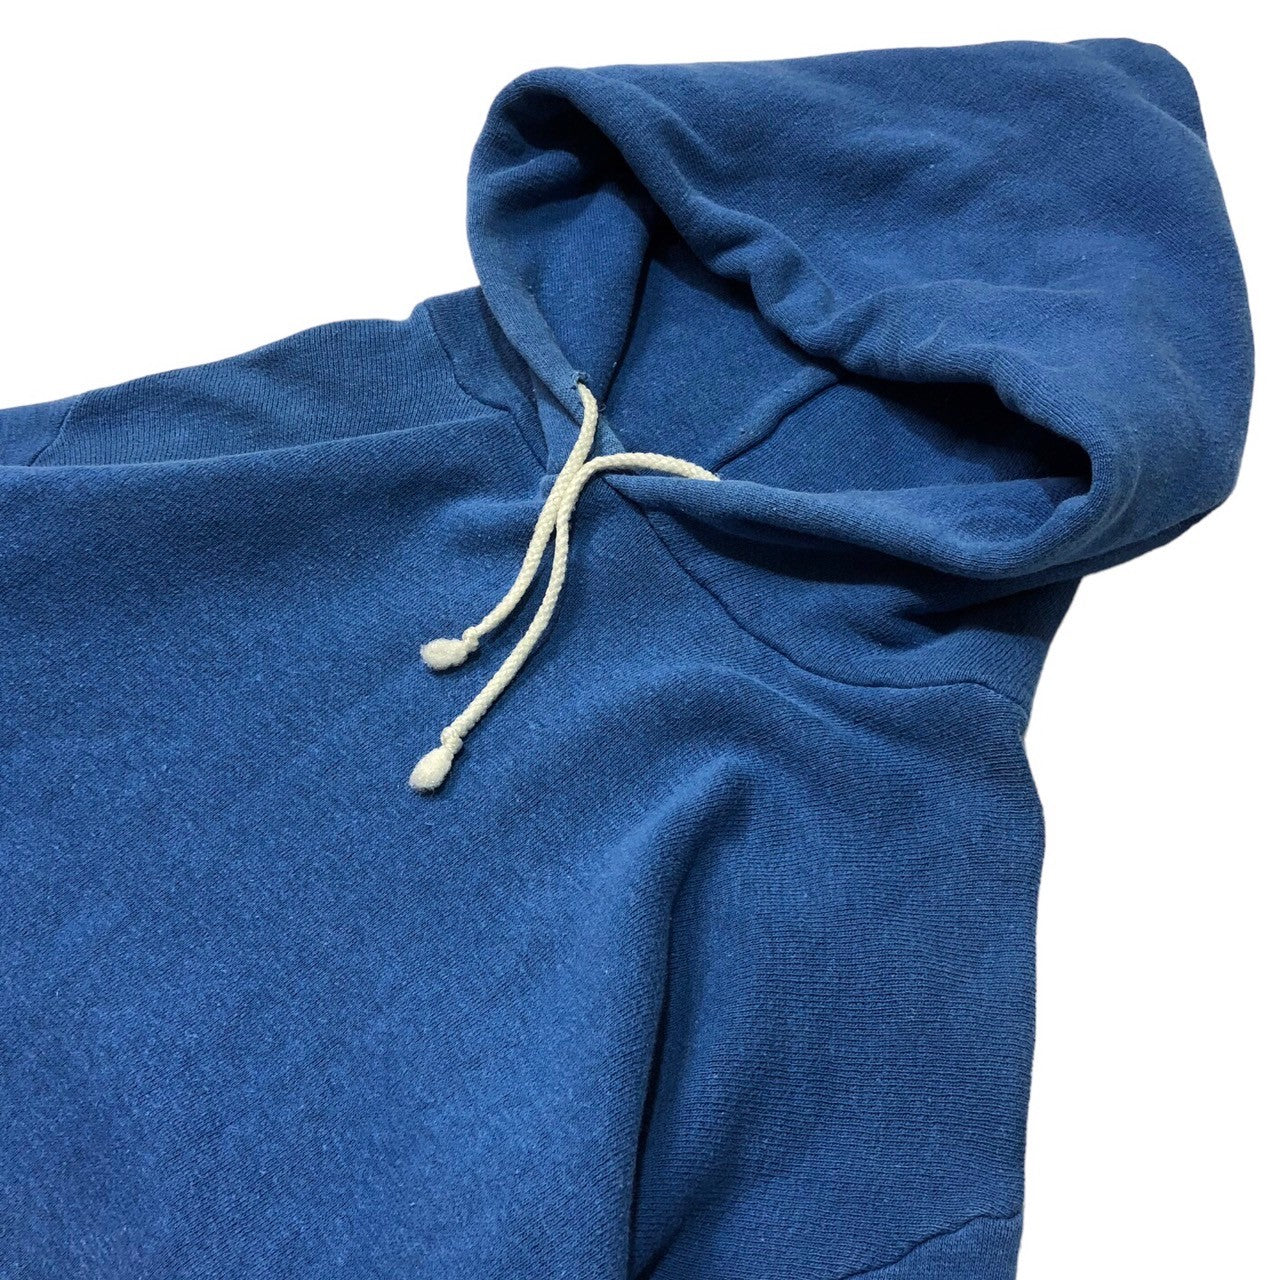 Windsor Wear(ウィンザーウェア) 60's ~ 70's vintage hoodie ヴィンテージ パーカー フーディー スウェット L ブルー 推定60年代～70年代 カナダ製 軍支給ブランド